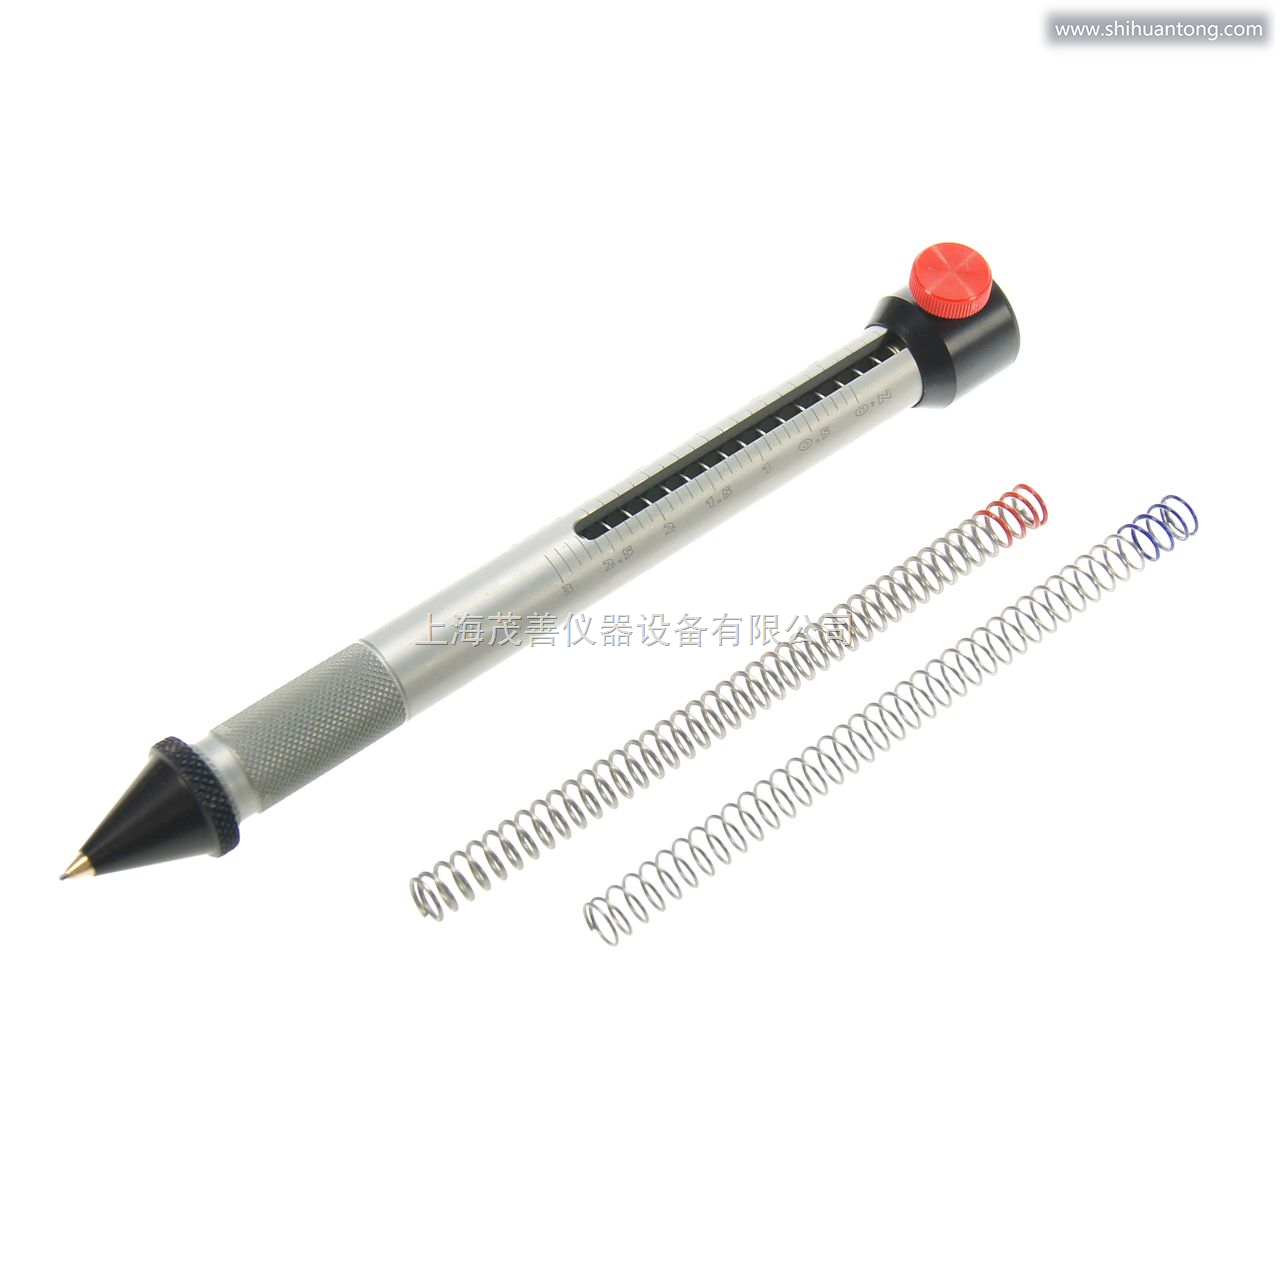 TQC 硬度笔（硬度测试仪用于测量涂层，涂漆，塑料或相关产品的硬度及耐划伤性）